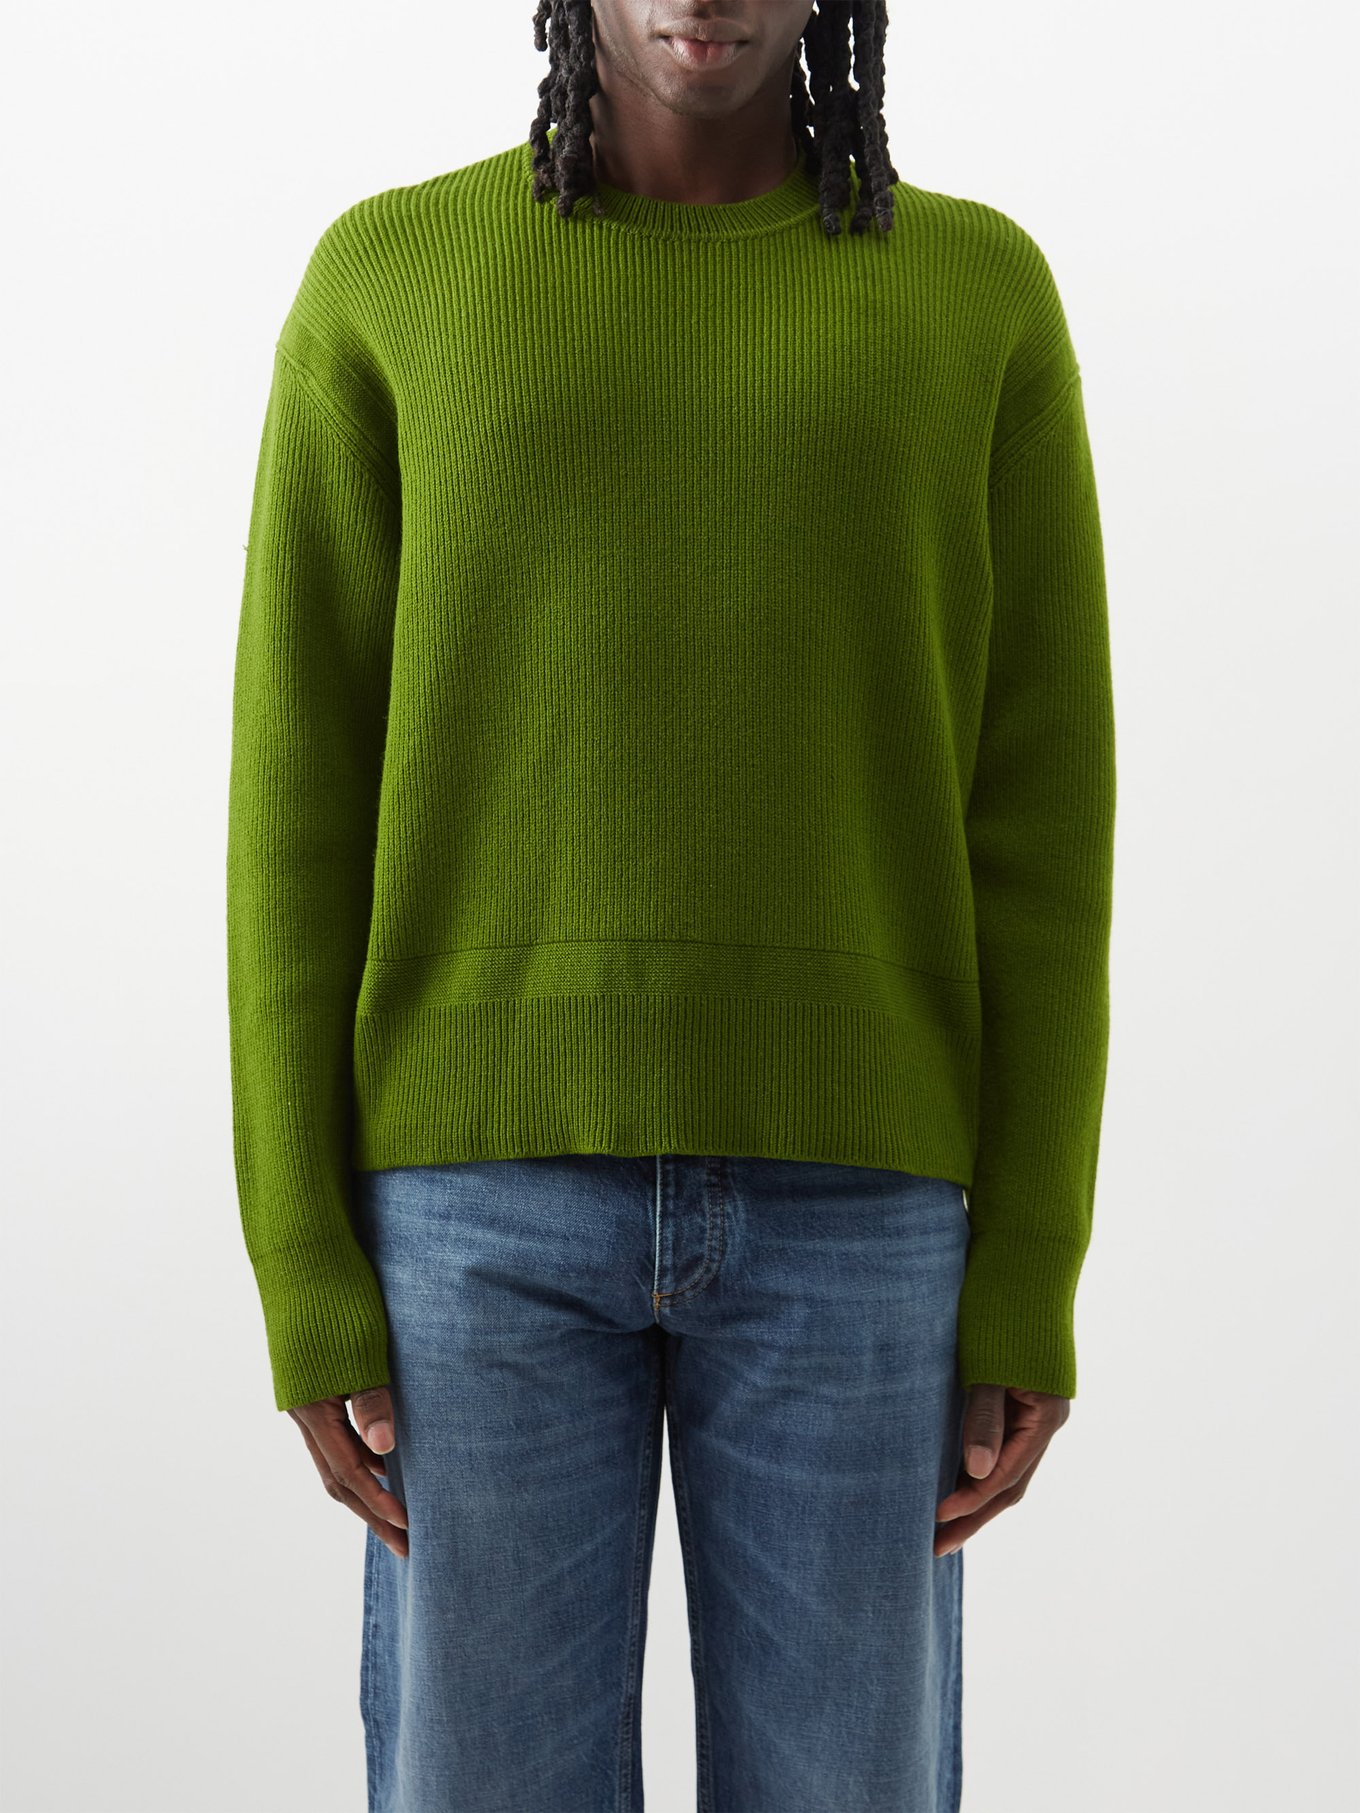 Bottega Veneta Glass Green Wool Sweater - ニット/セーター